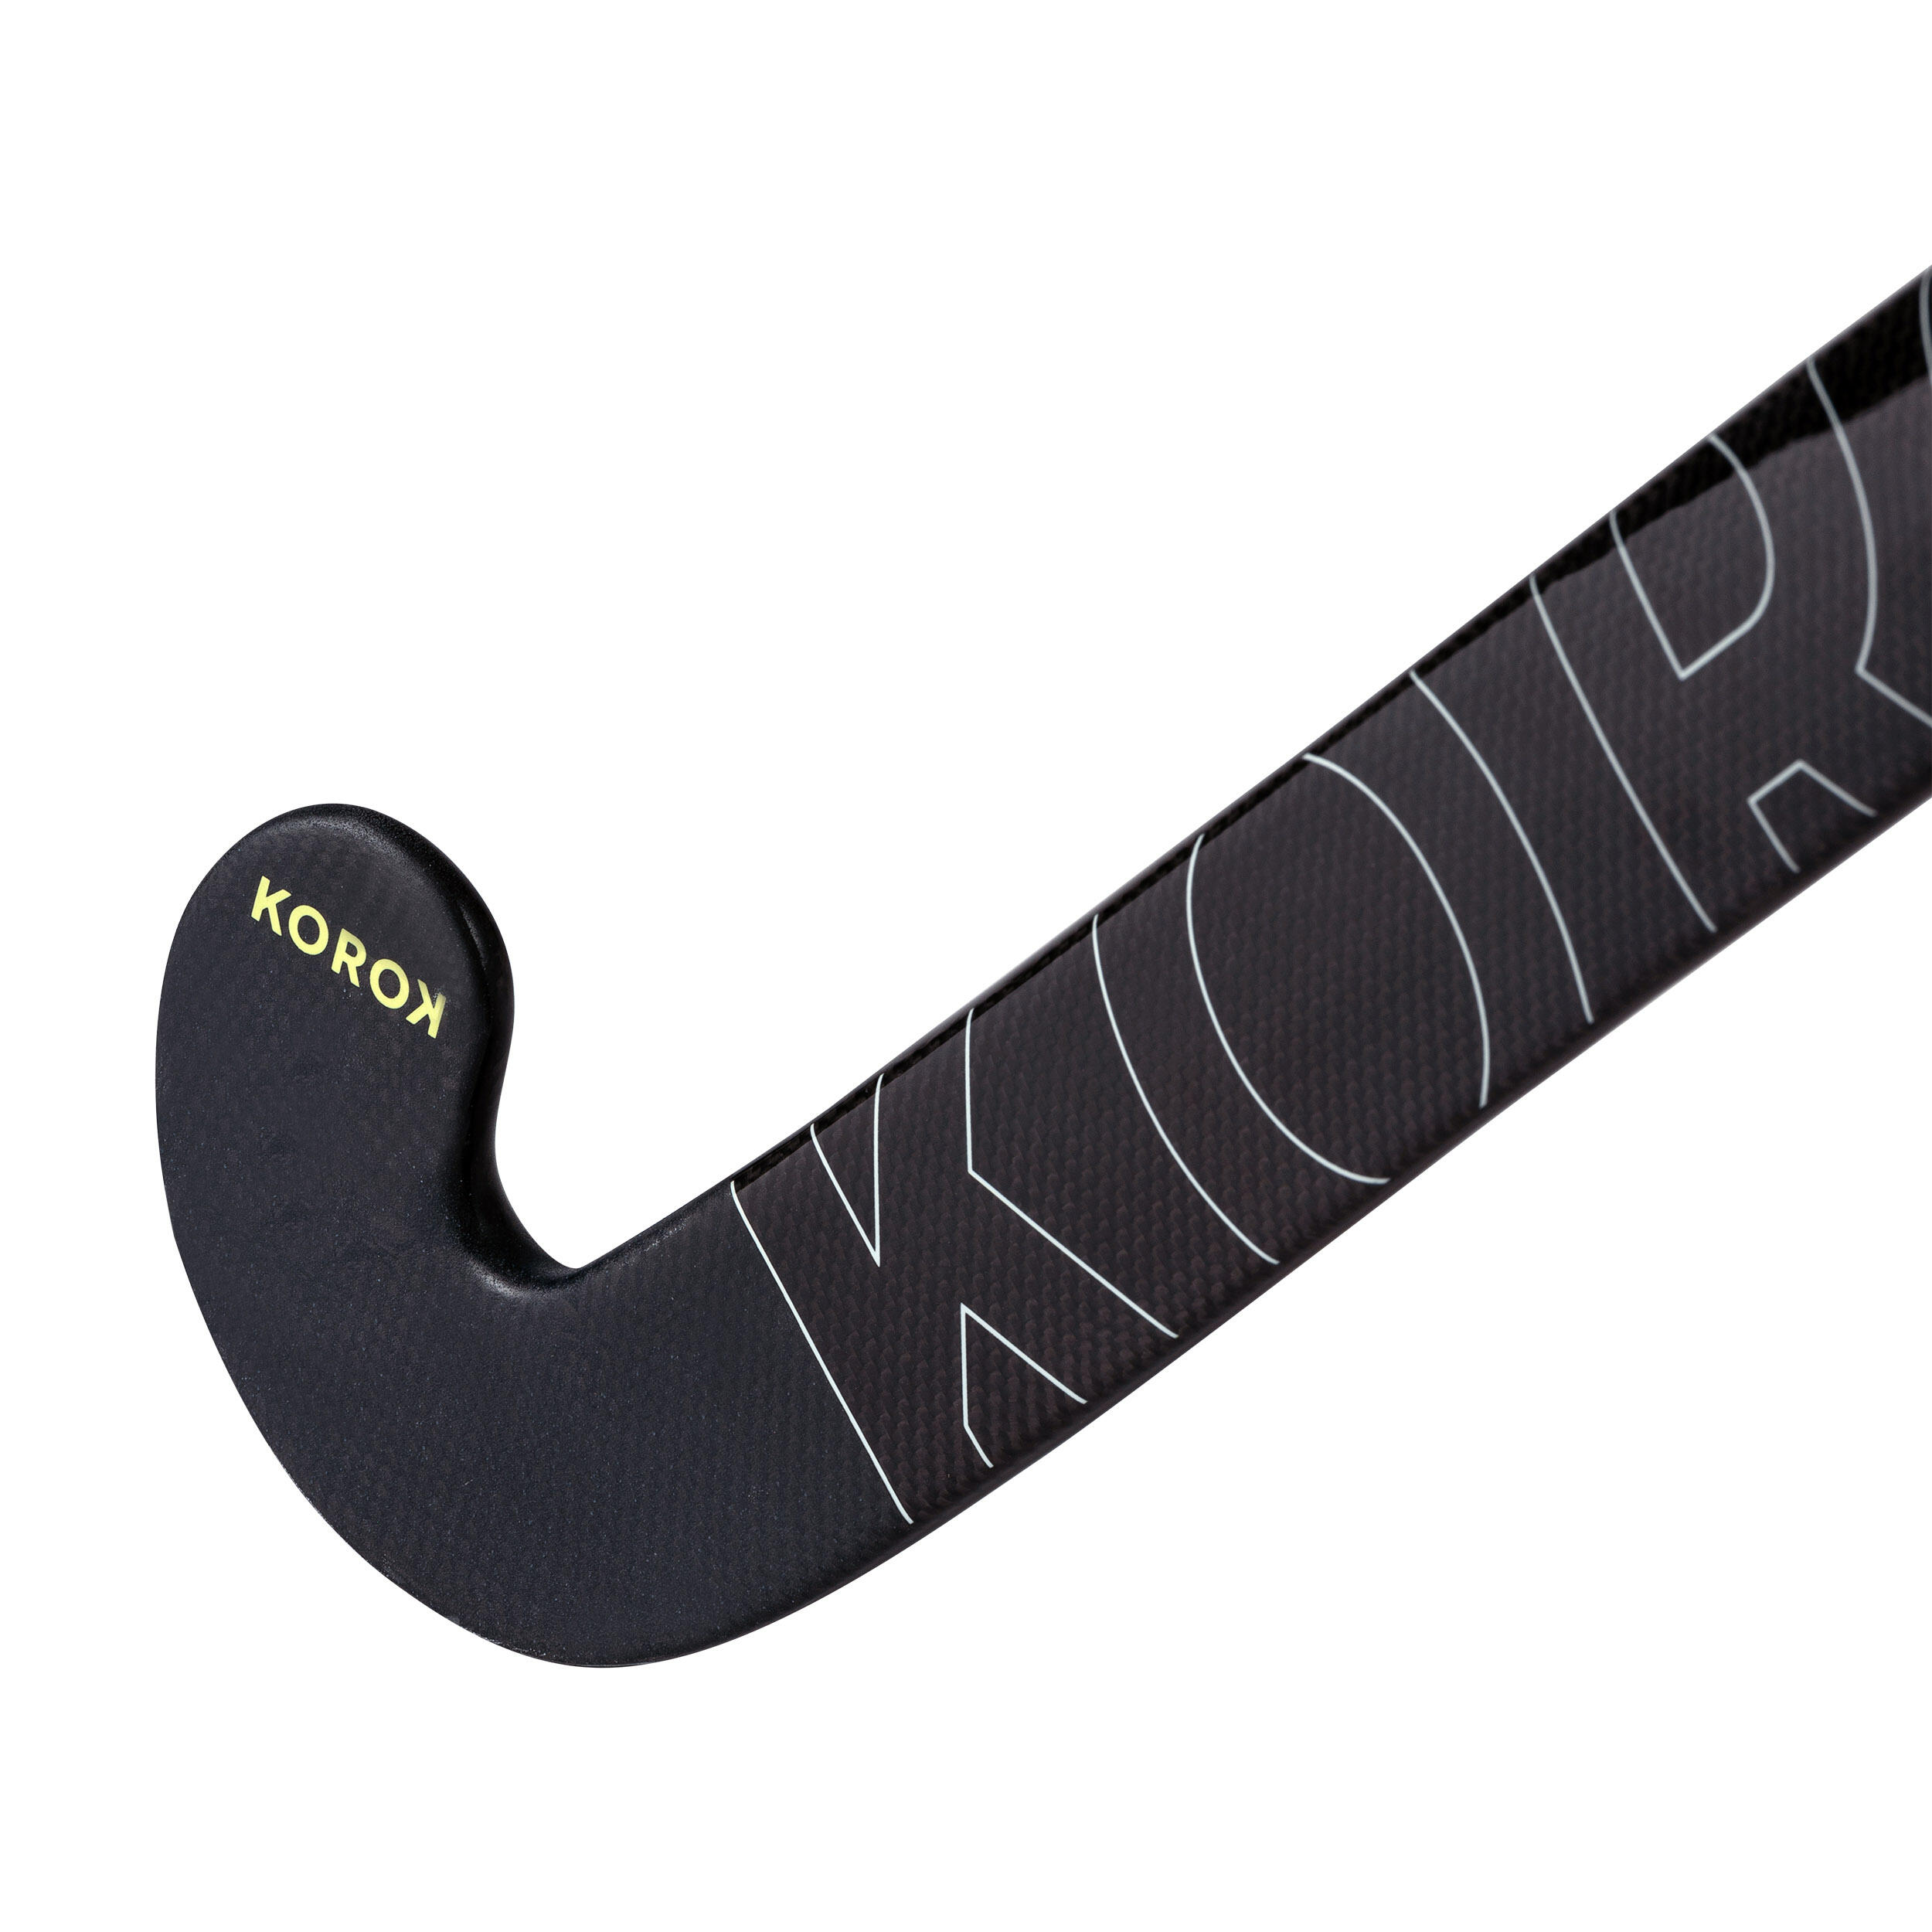 Adult Intermediate 60% Carbon Low Bow Field Hockey Stick FH560 - Black/Khaki 2/12